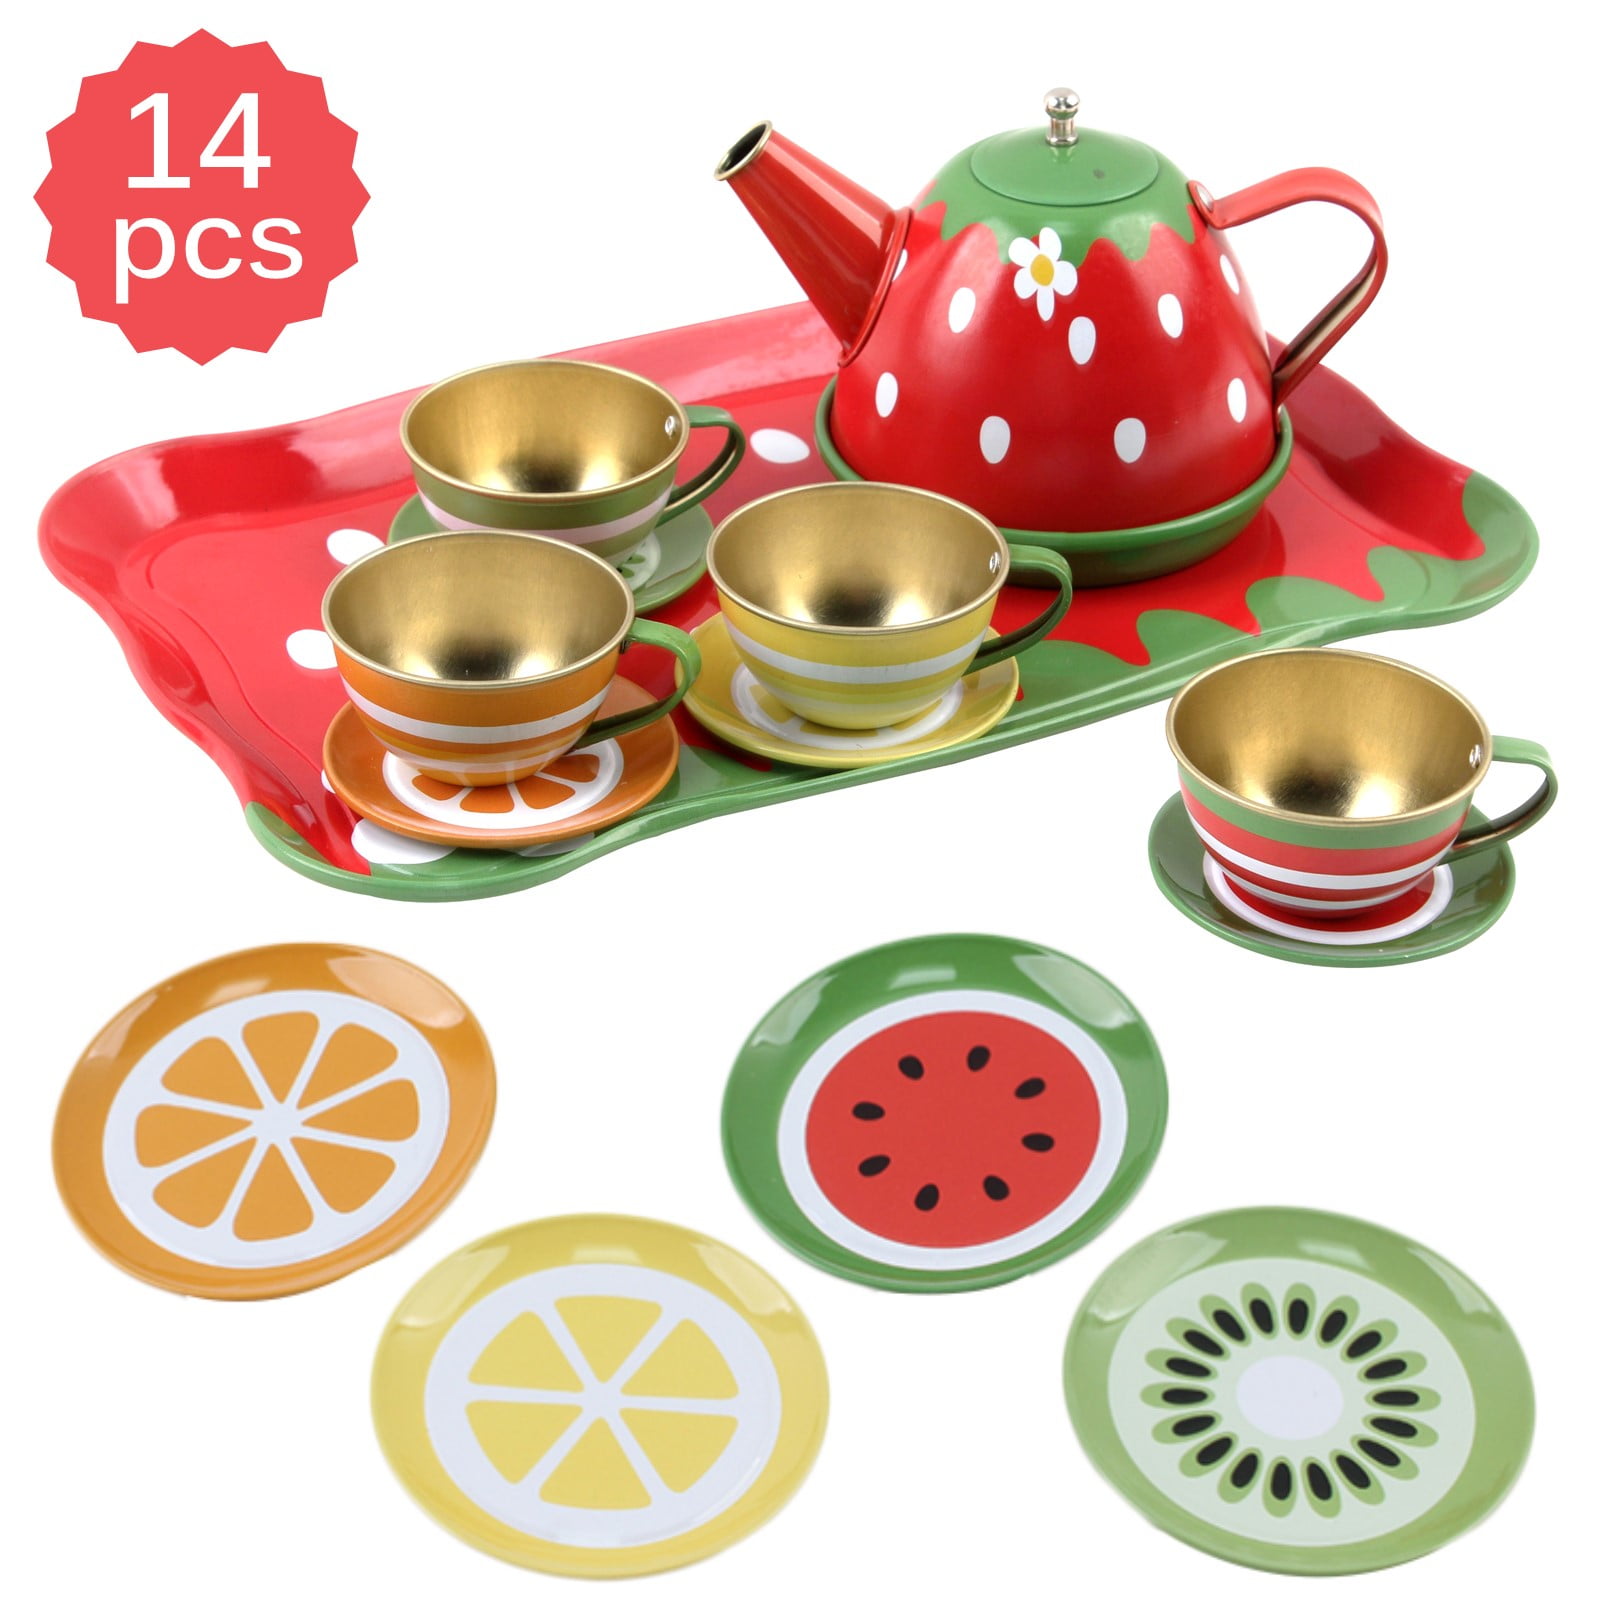 Cooking Fun Teatime Service Play Set 14 Pieces Spoons Plates Teacups Teapot 